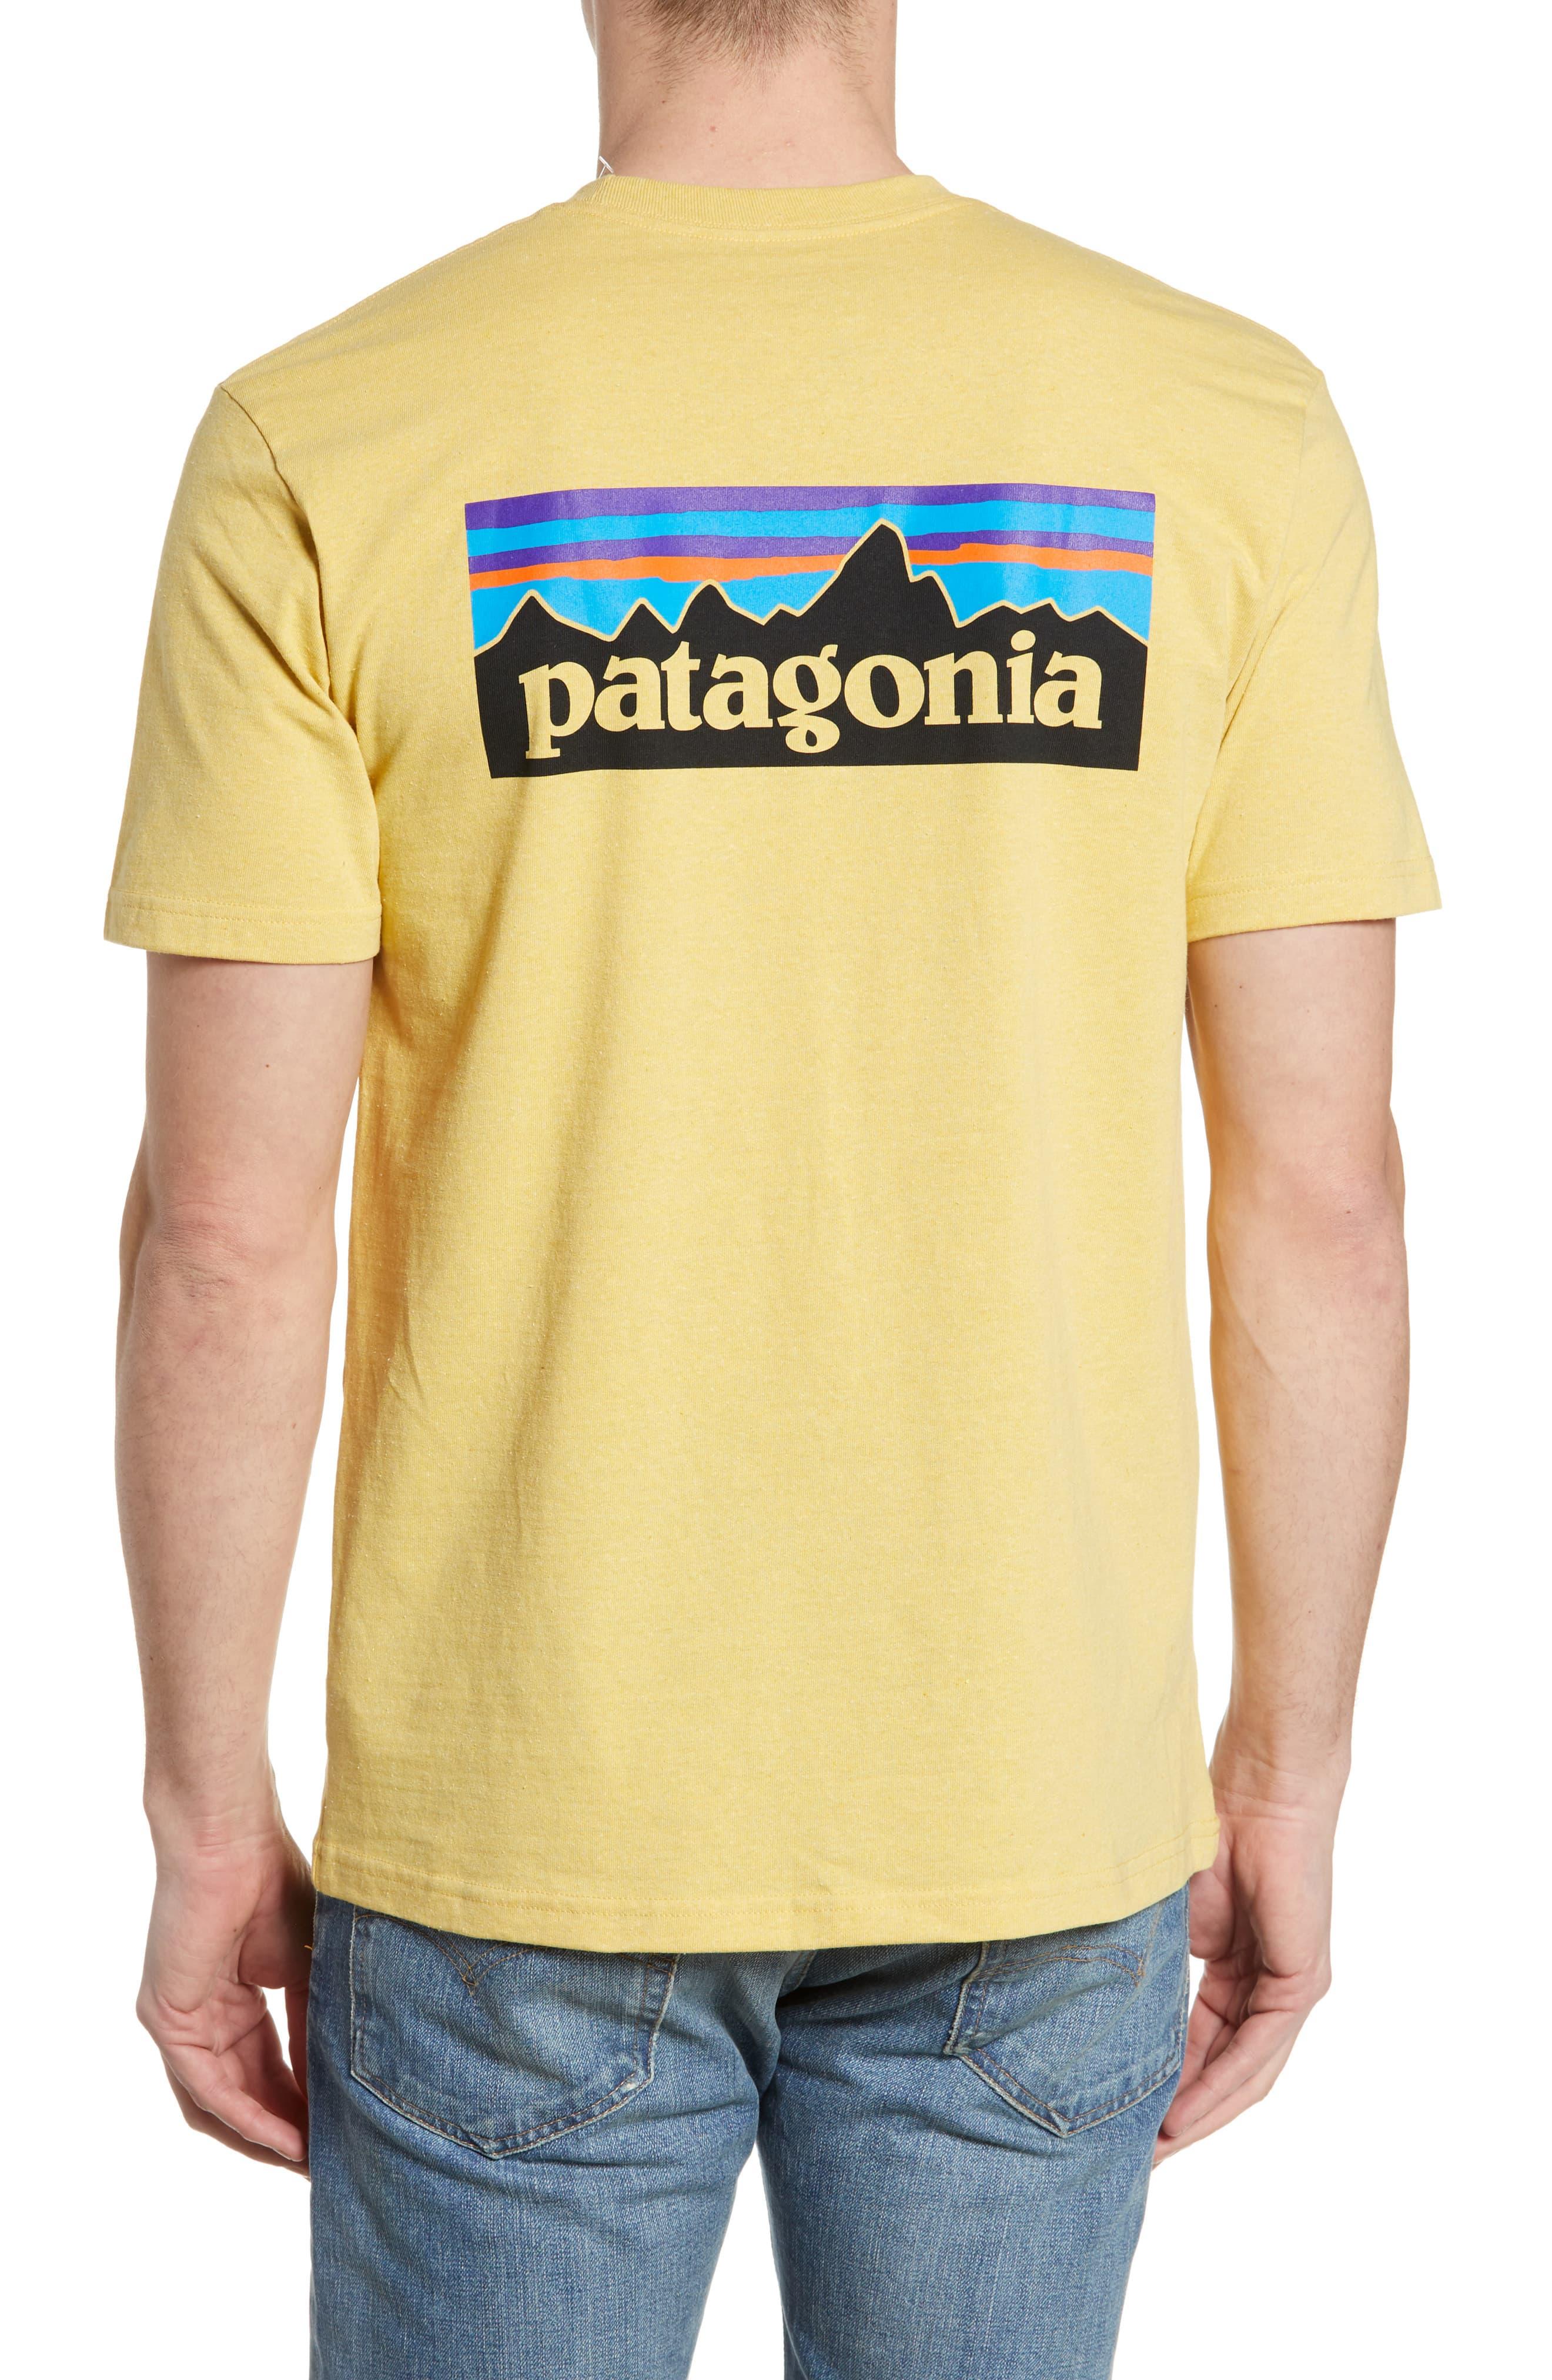 Patagonia Responsibili-tee T-shirt in Yellow for Men - Lyst